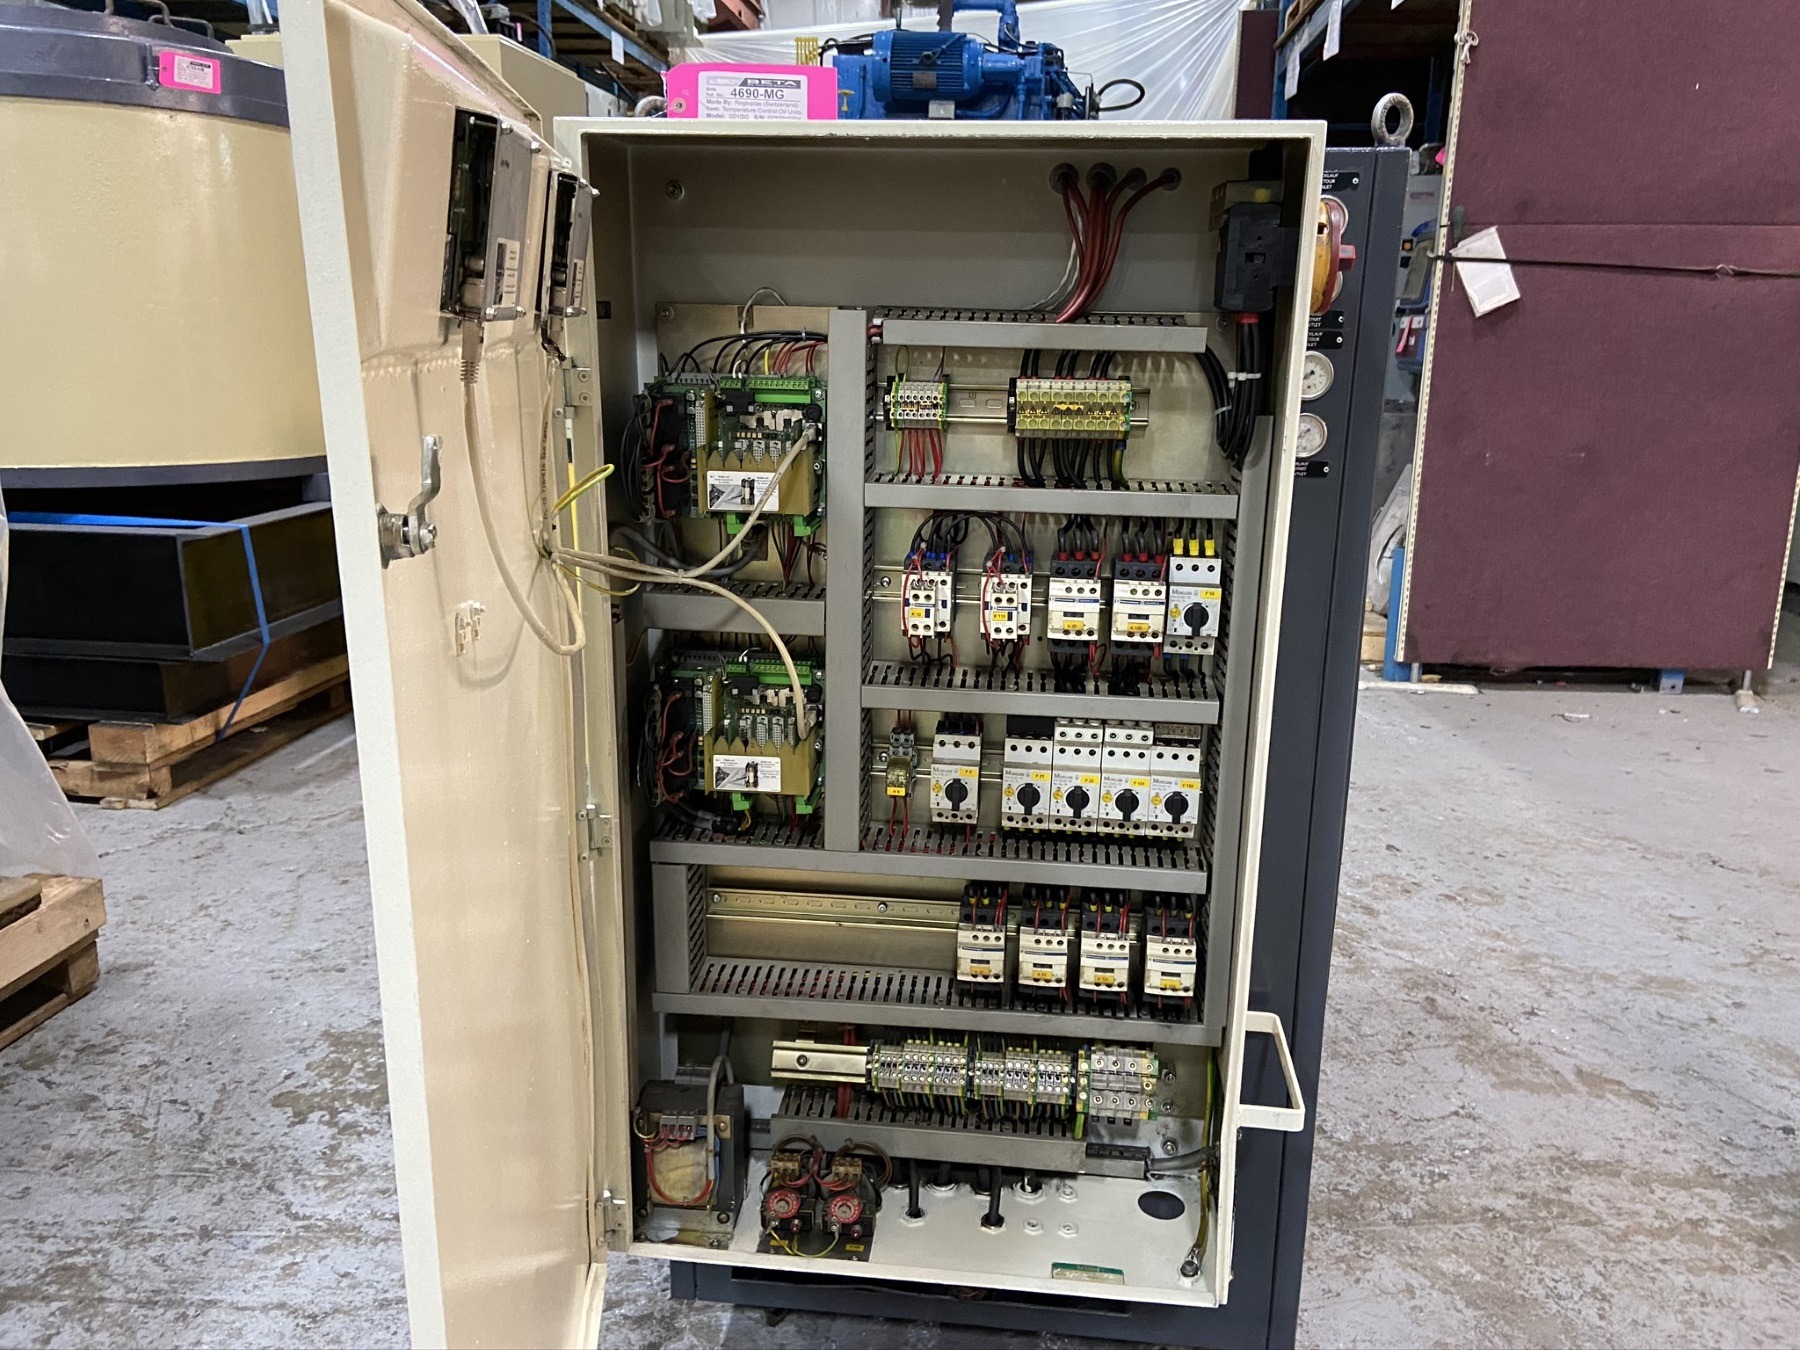 Picture of Used Sterlco Hot Oil Temperature Control Unit